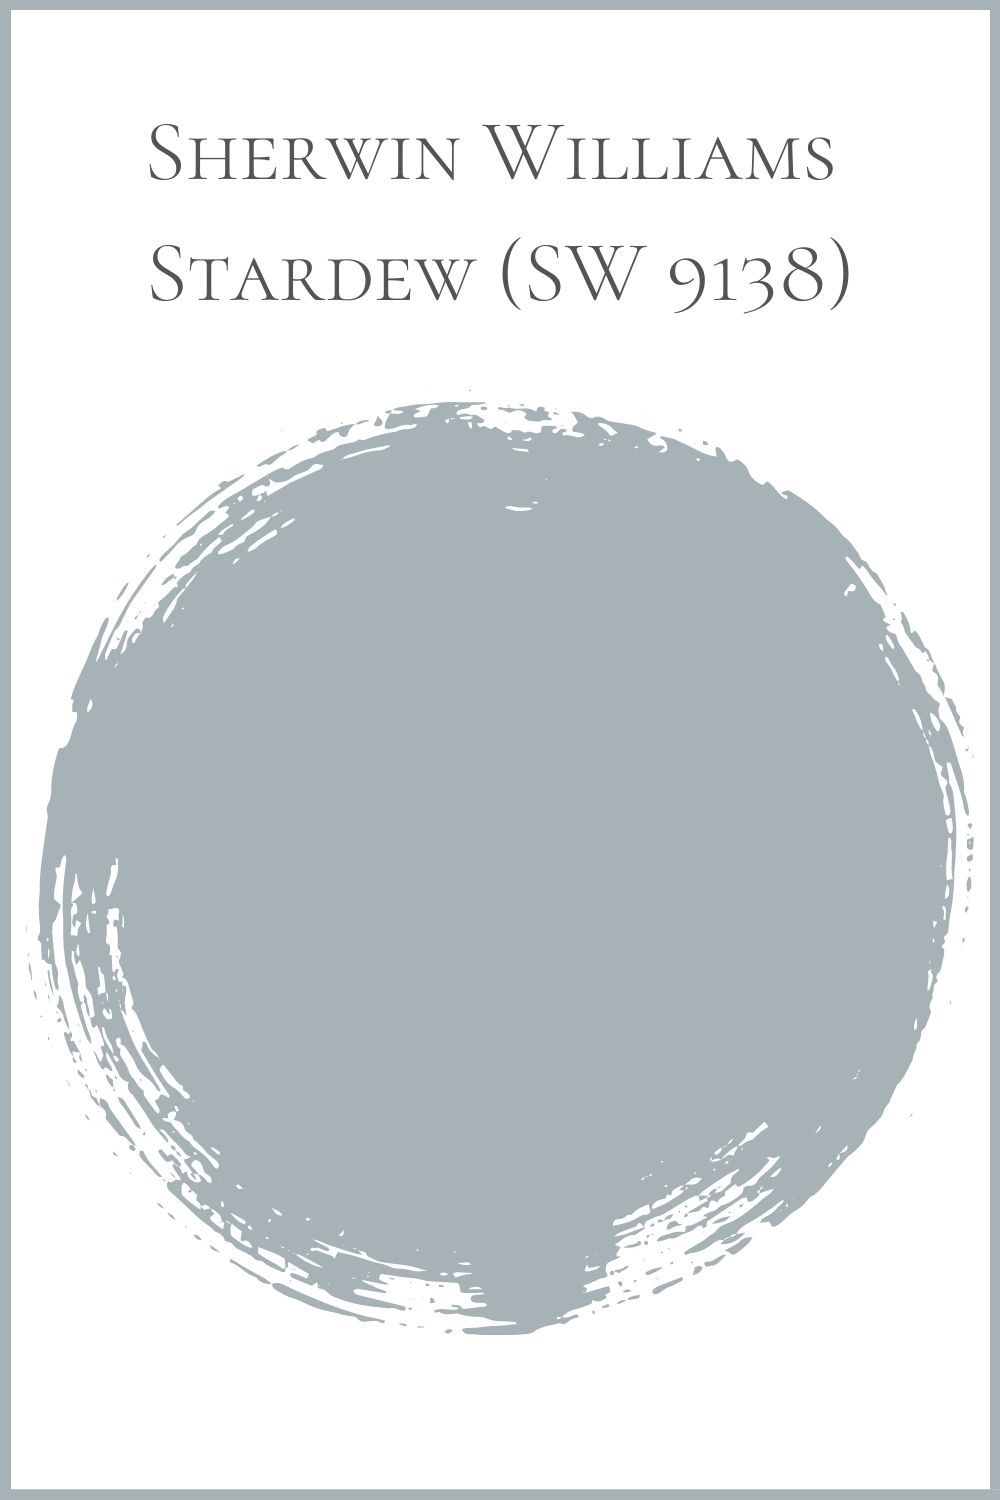 SW stardew paint